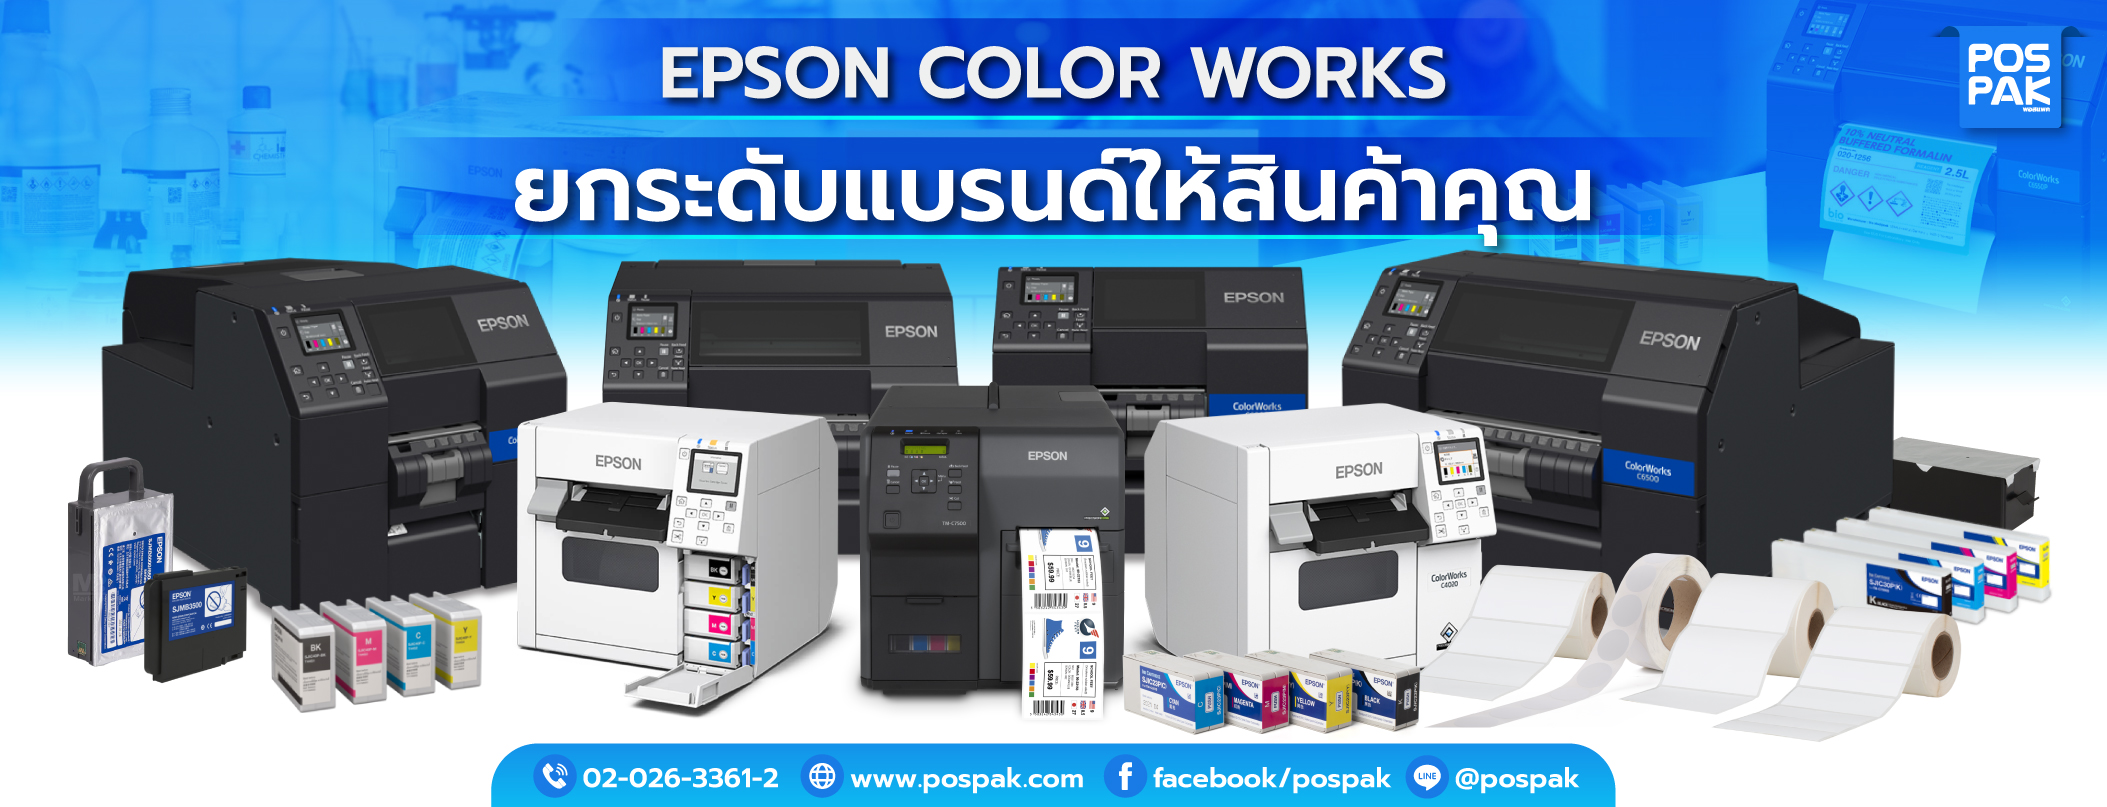 EPSON-Color-Works-2.jpeg